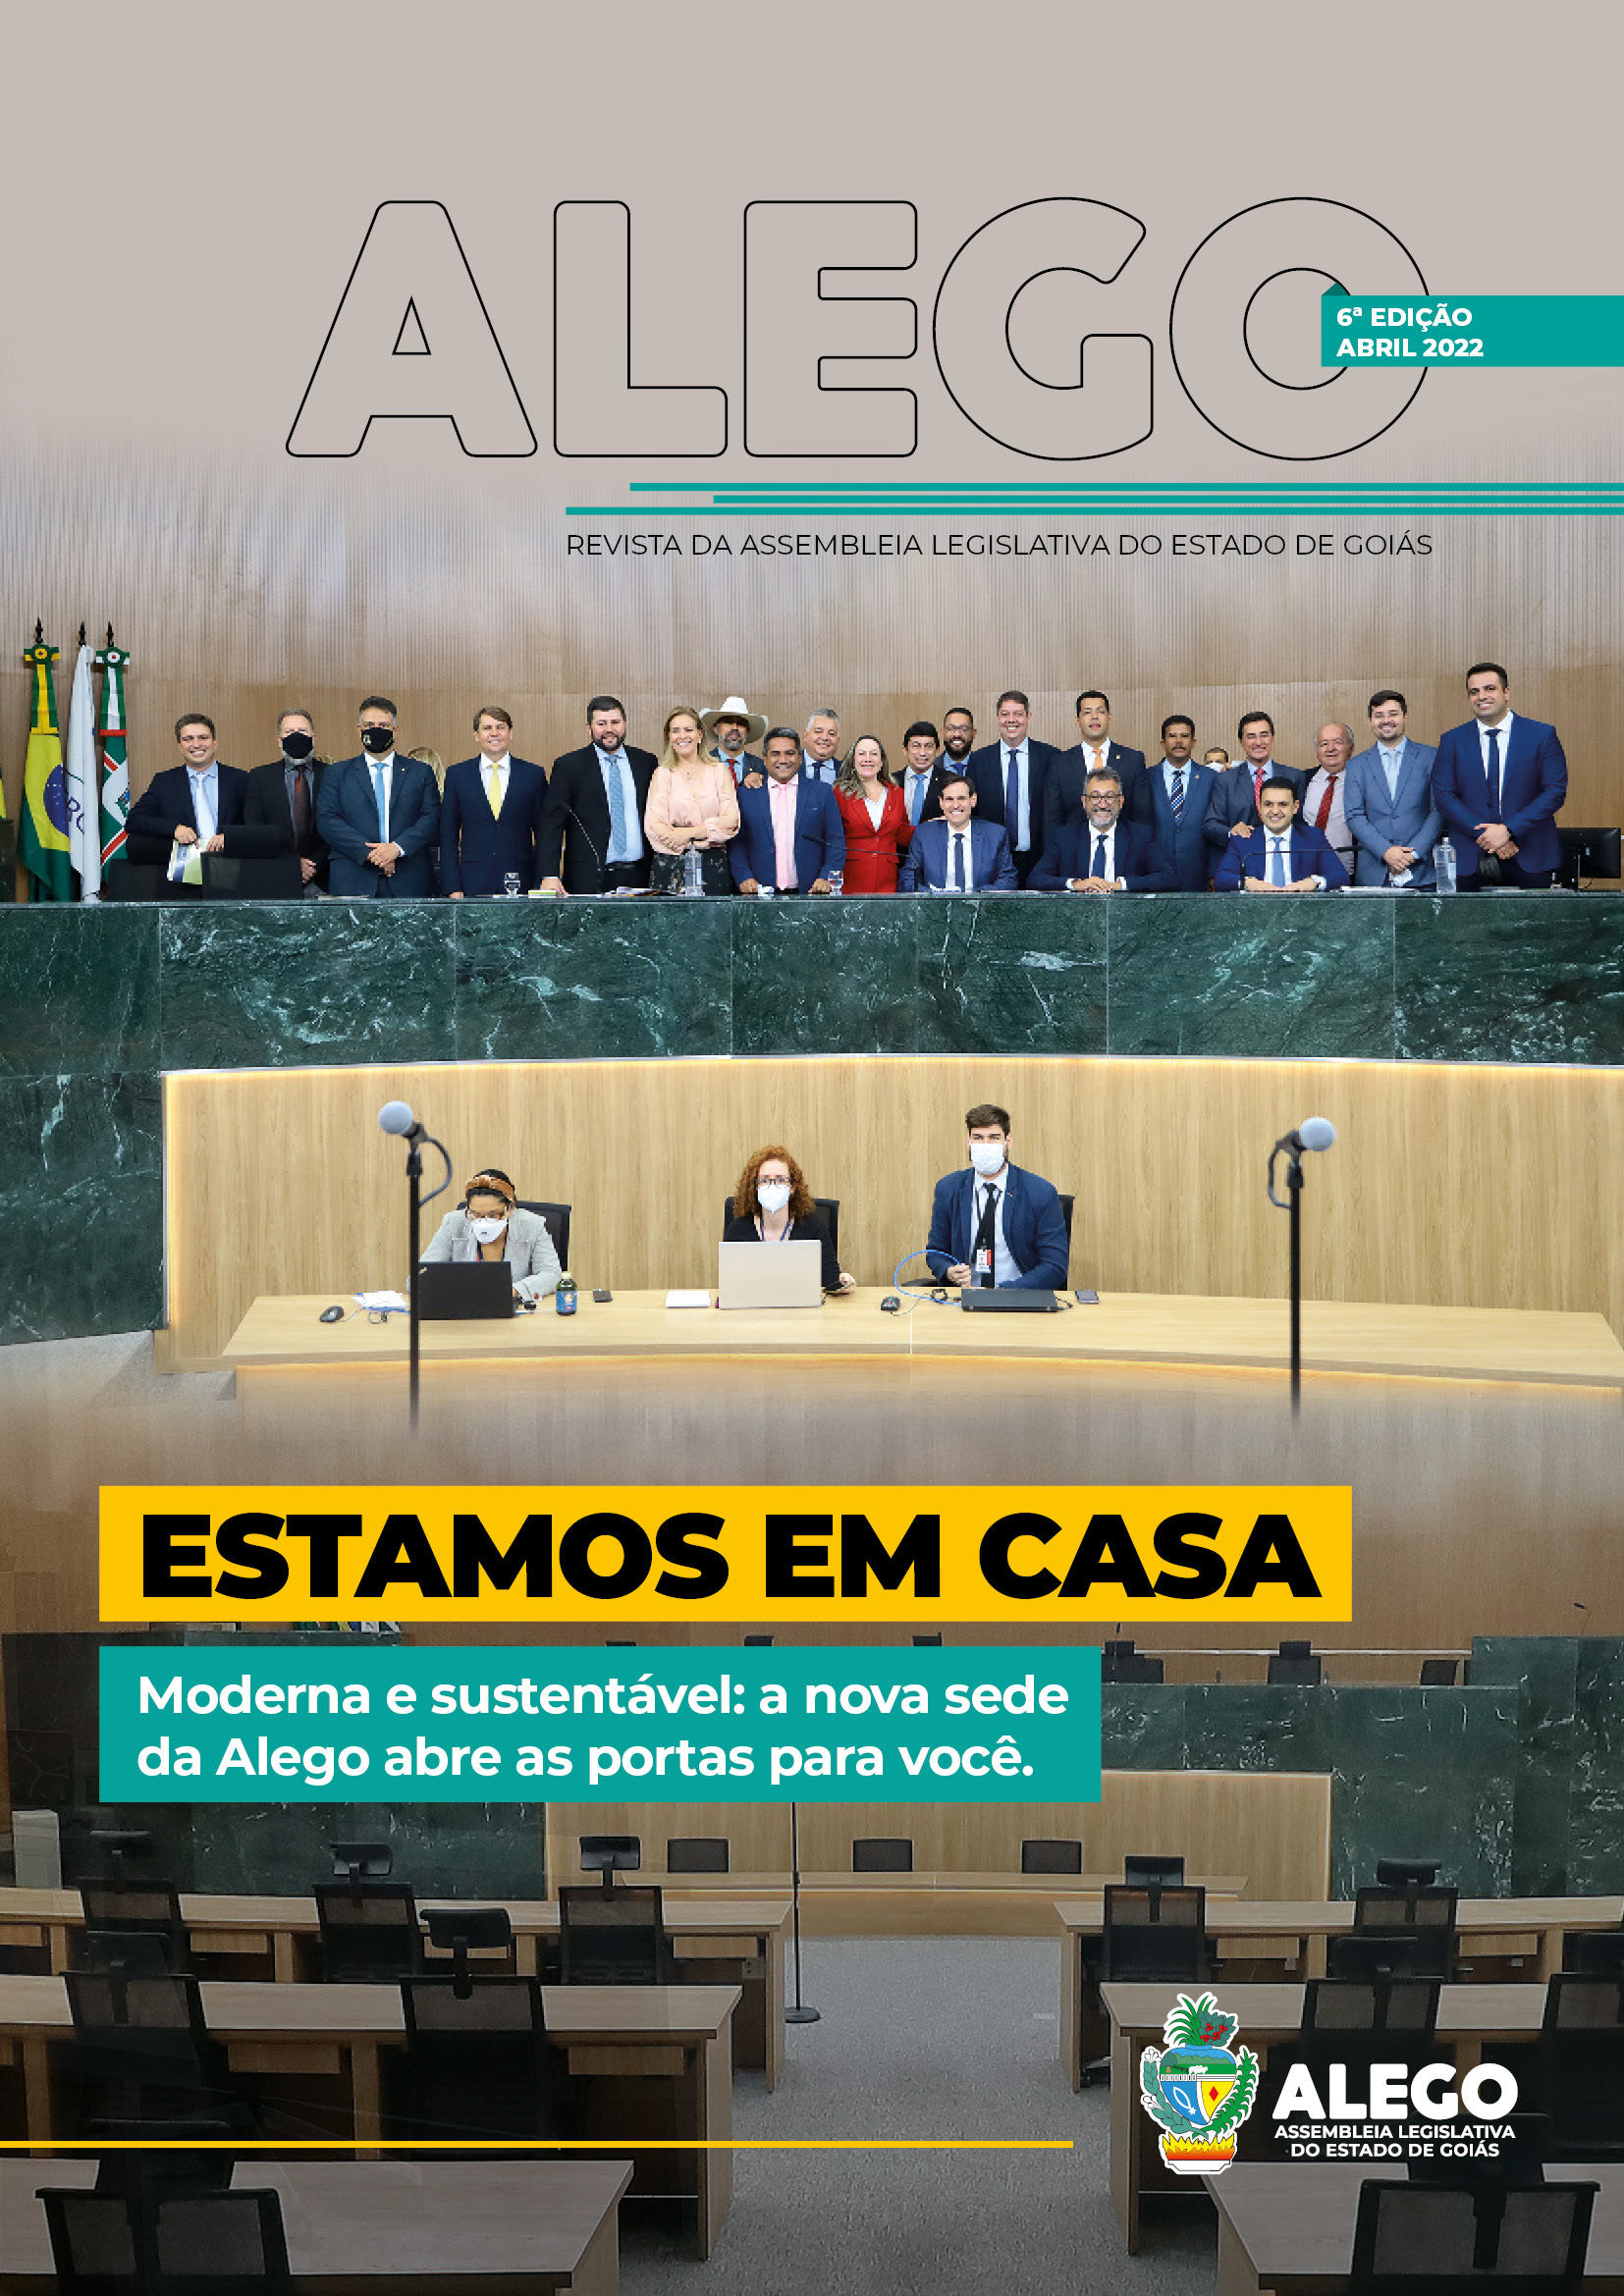 Capa da Revista Alego n.º 6/2022